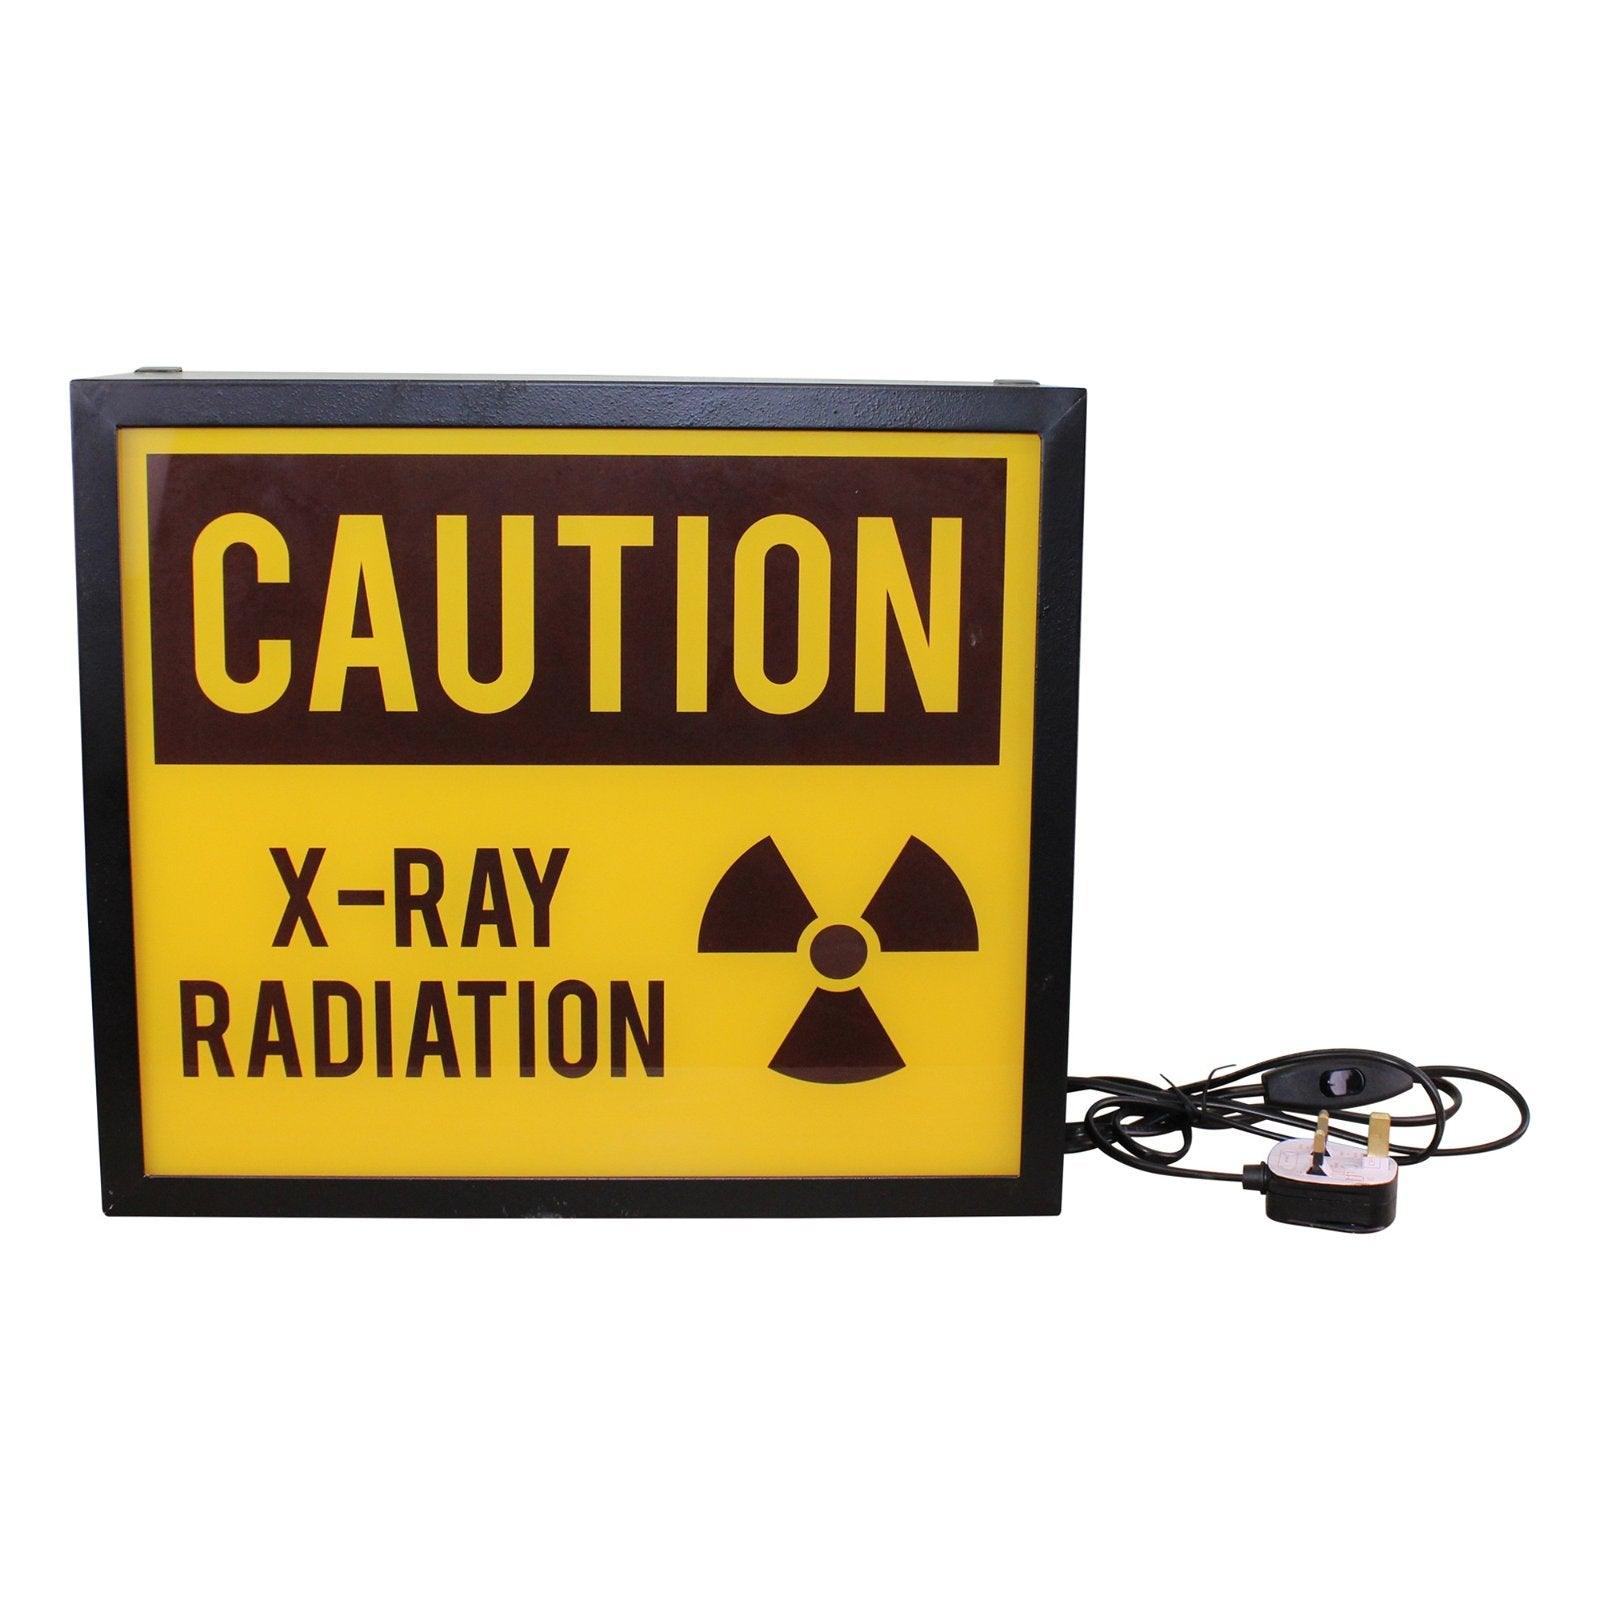 View Decorative Lightbox Caution XRay Radiation information